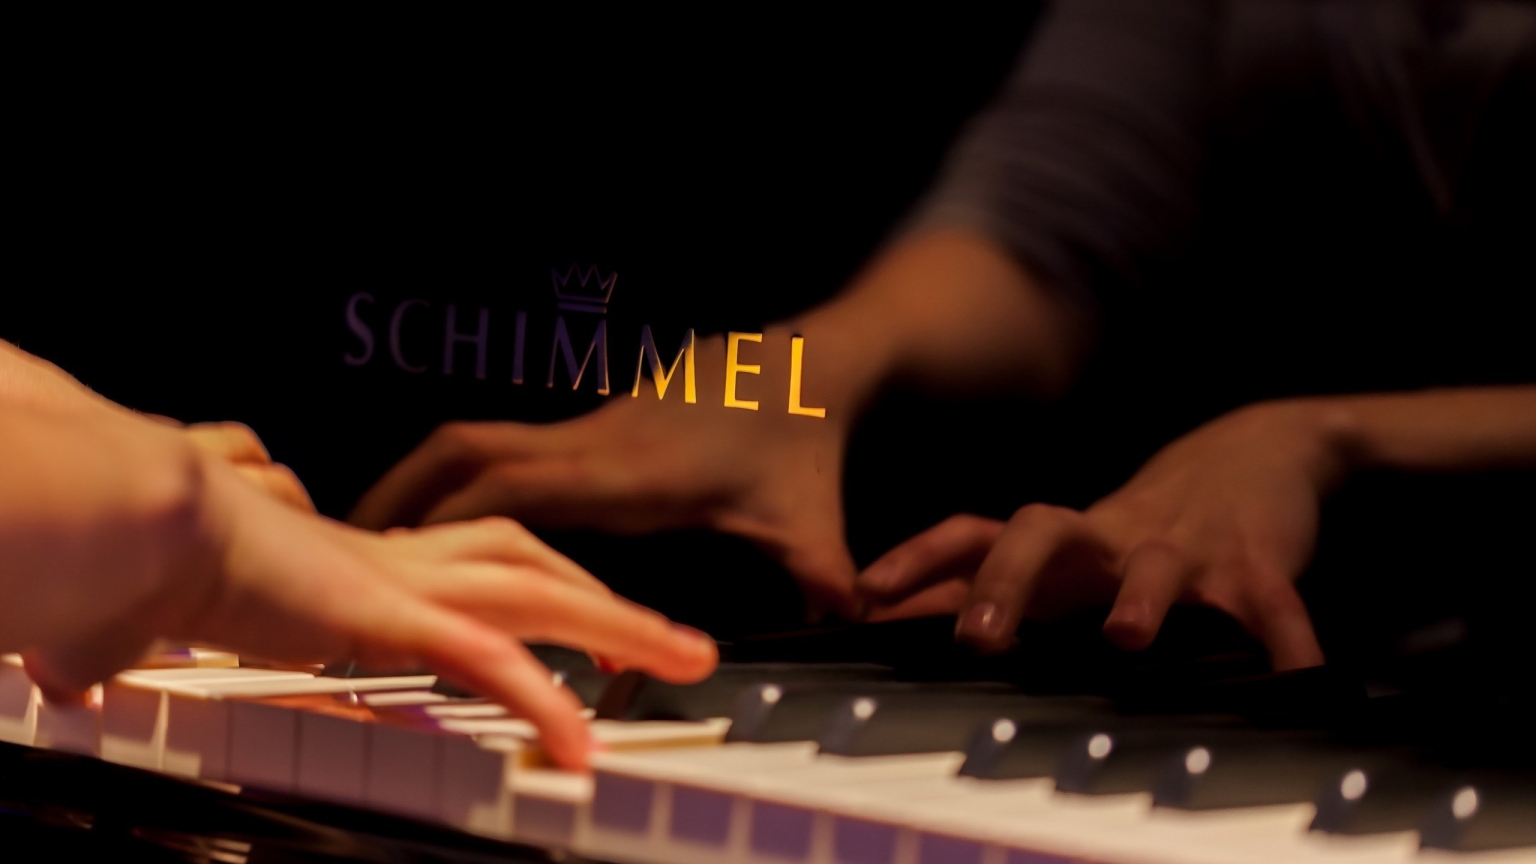 Schimmel Piano for 1536 x 864 HDTV resolution